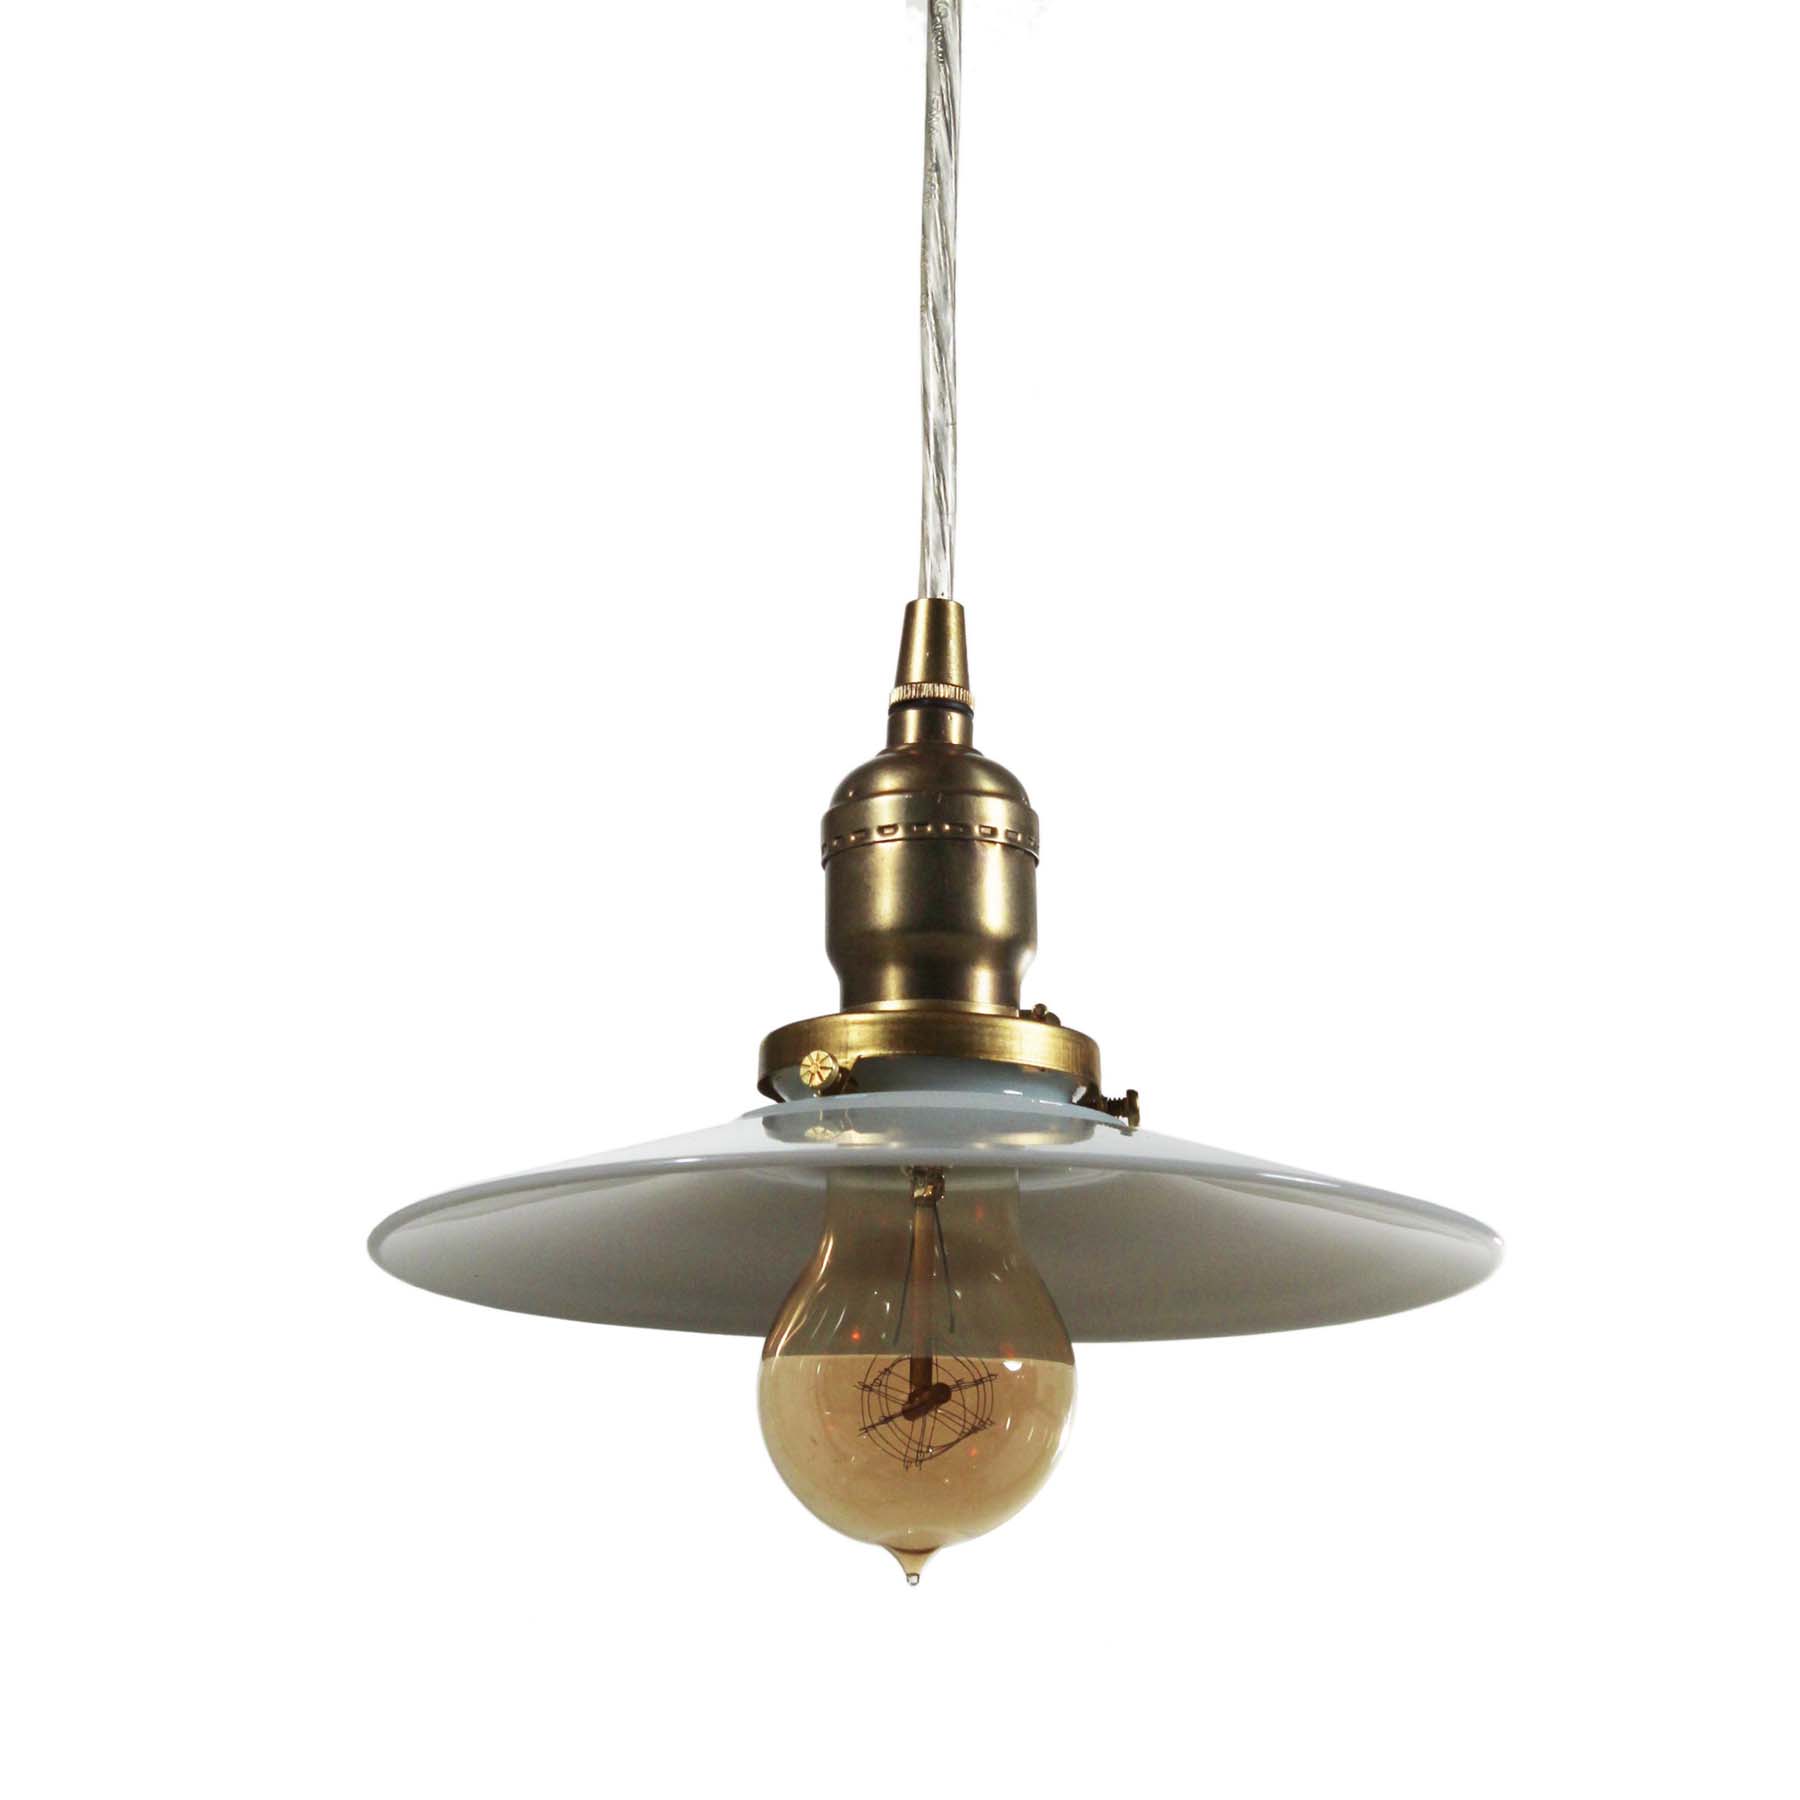 Brass Pendant Light with Milk Glass Shade, Antique Lighting-0